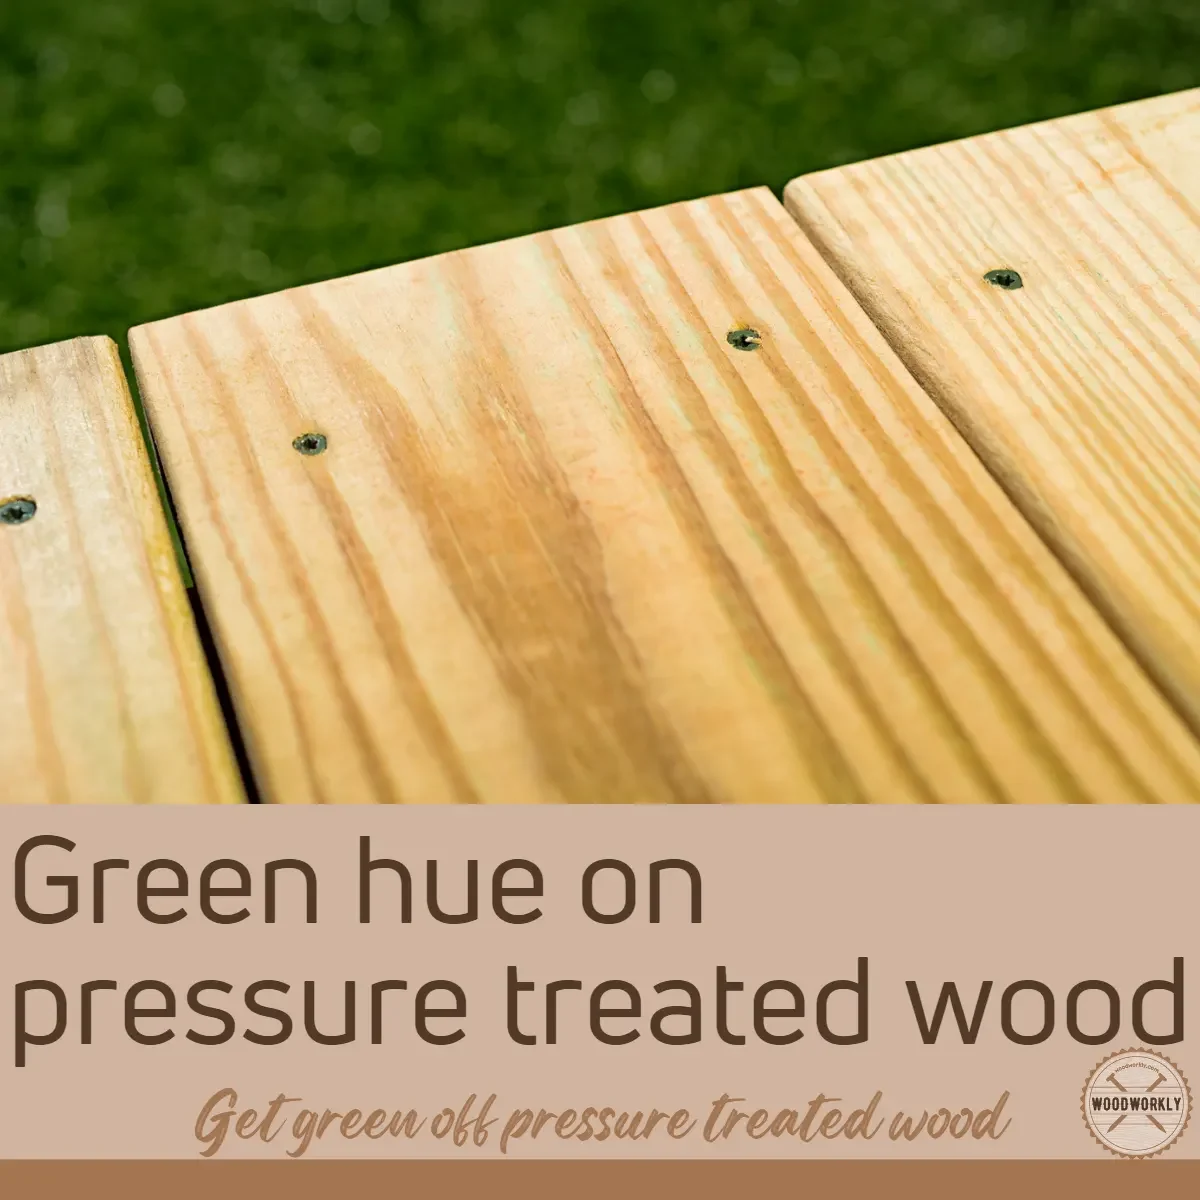 Green hue on pressure treated wood